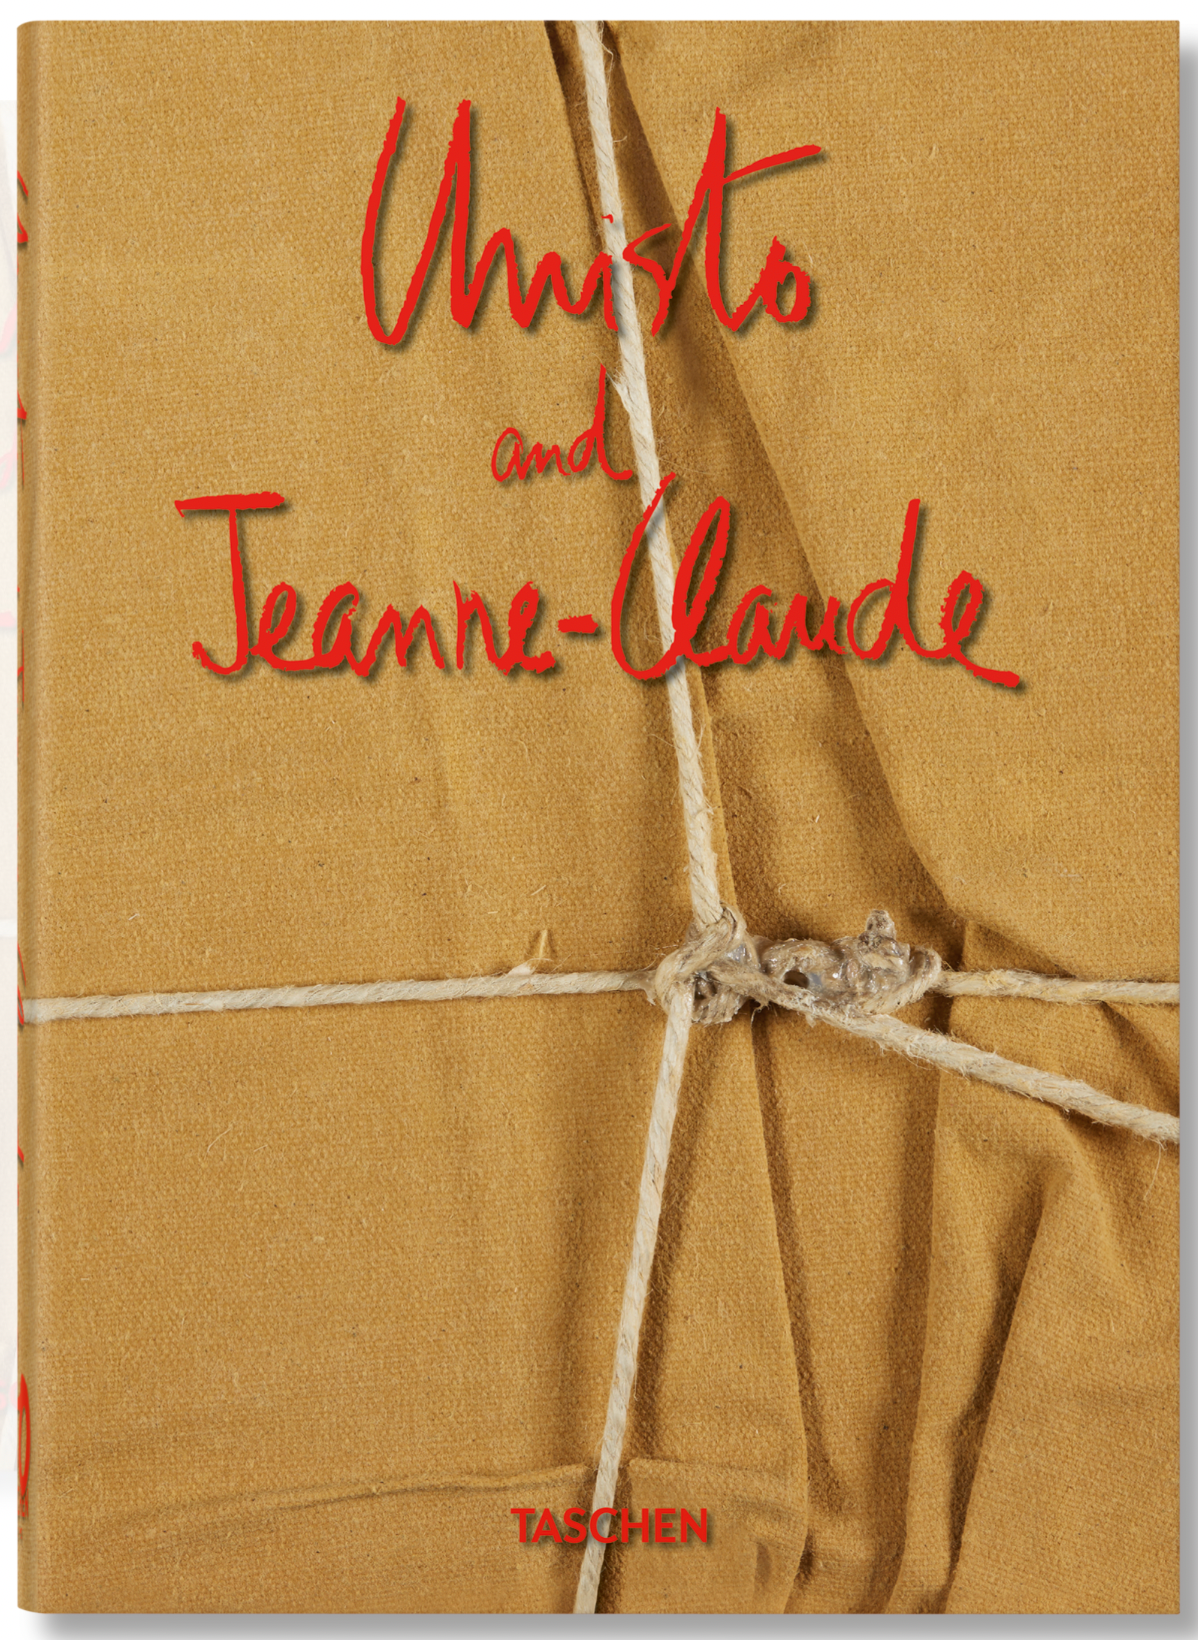 TASCHEN BOOKS - Christo and Jeanne-Claude. 40th Ed.